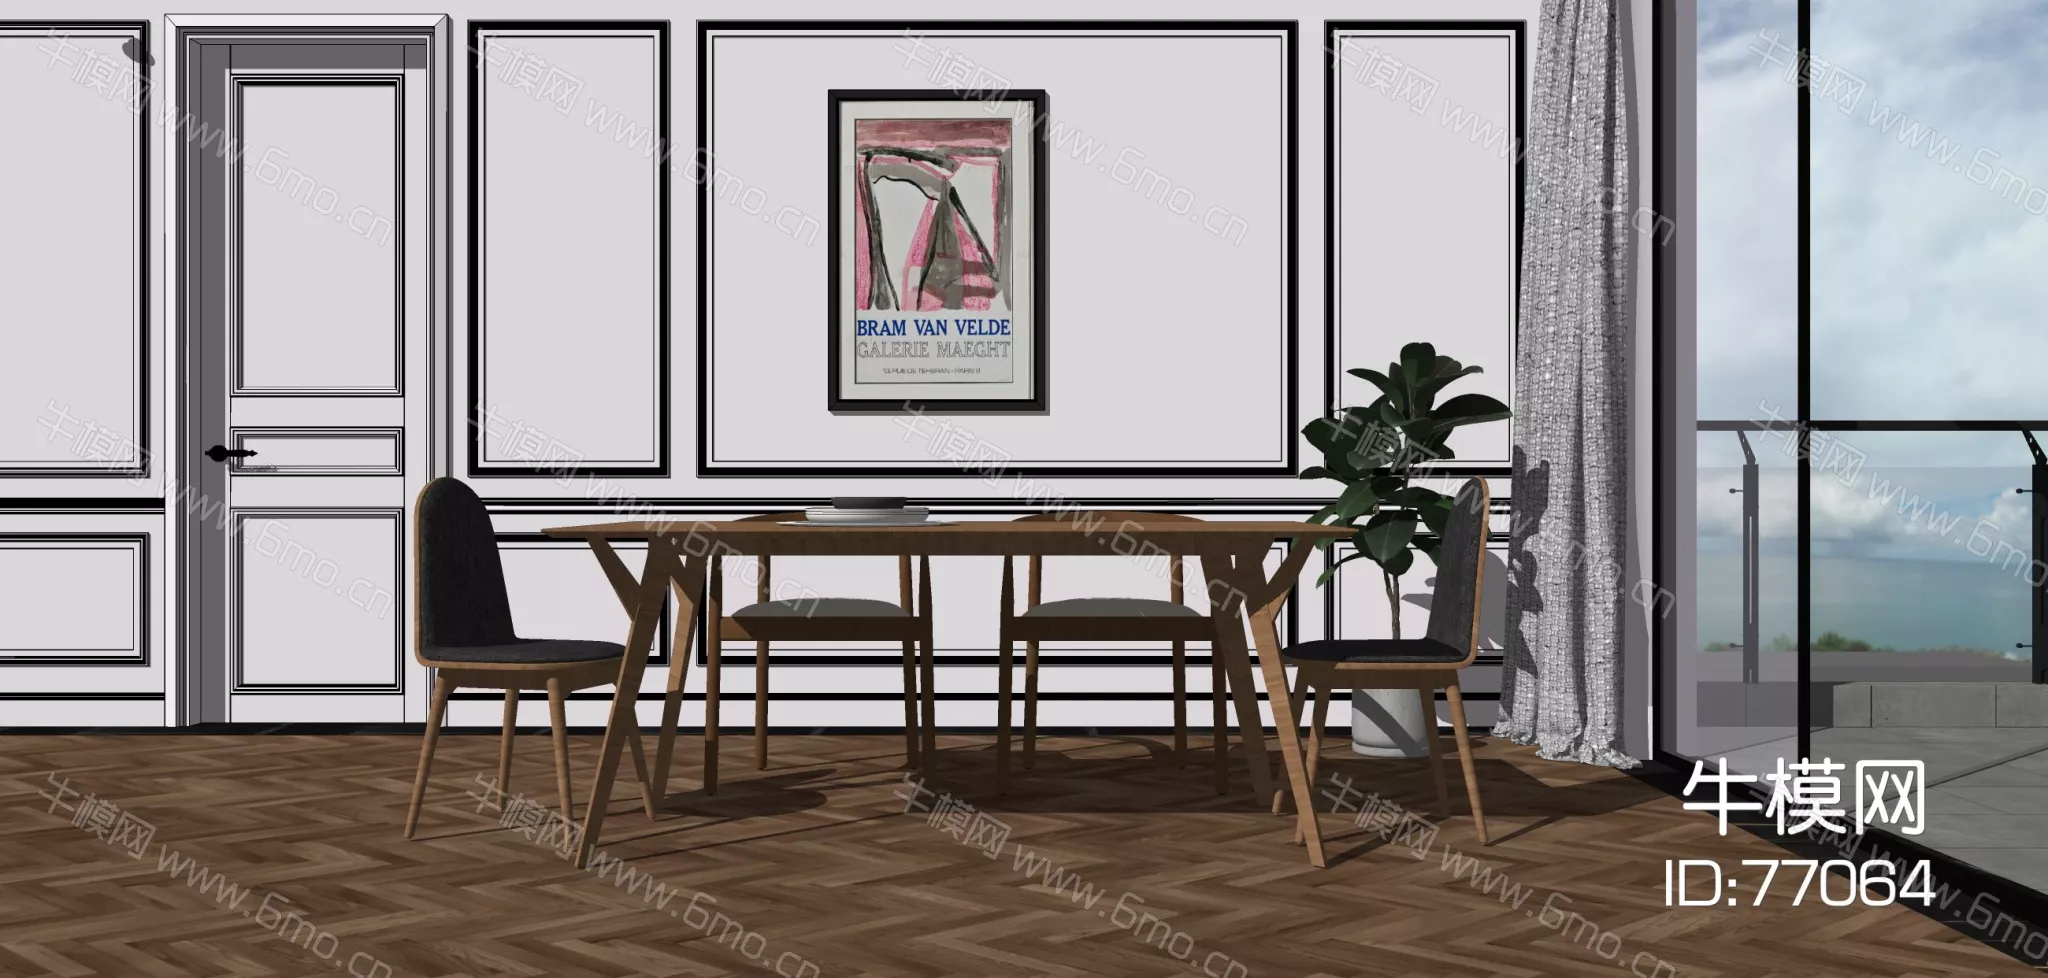 NORDIC DINING TABLE SET - SKETCHUP 3D MODEL - ENSCAPE - 77064